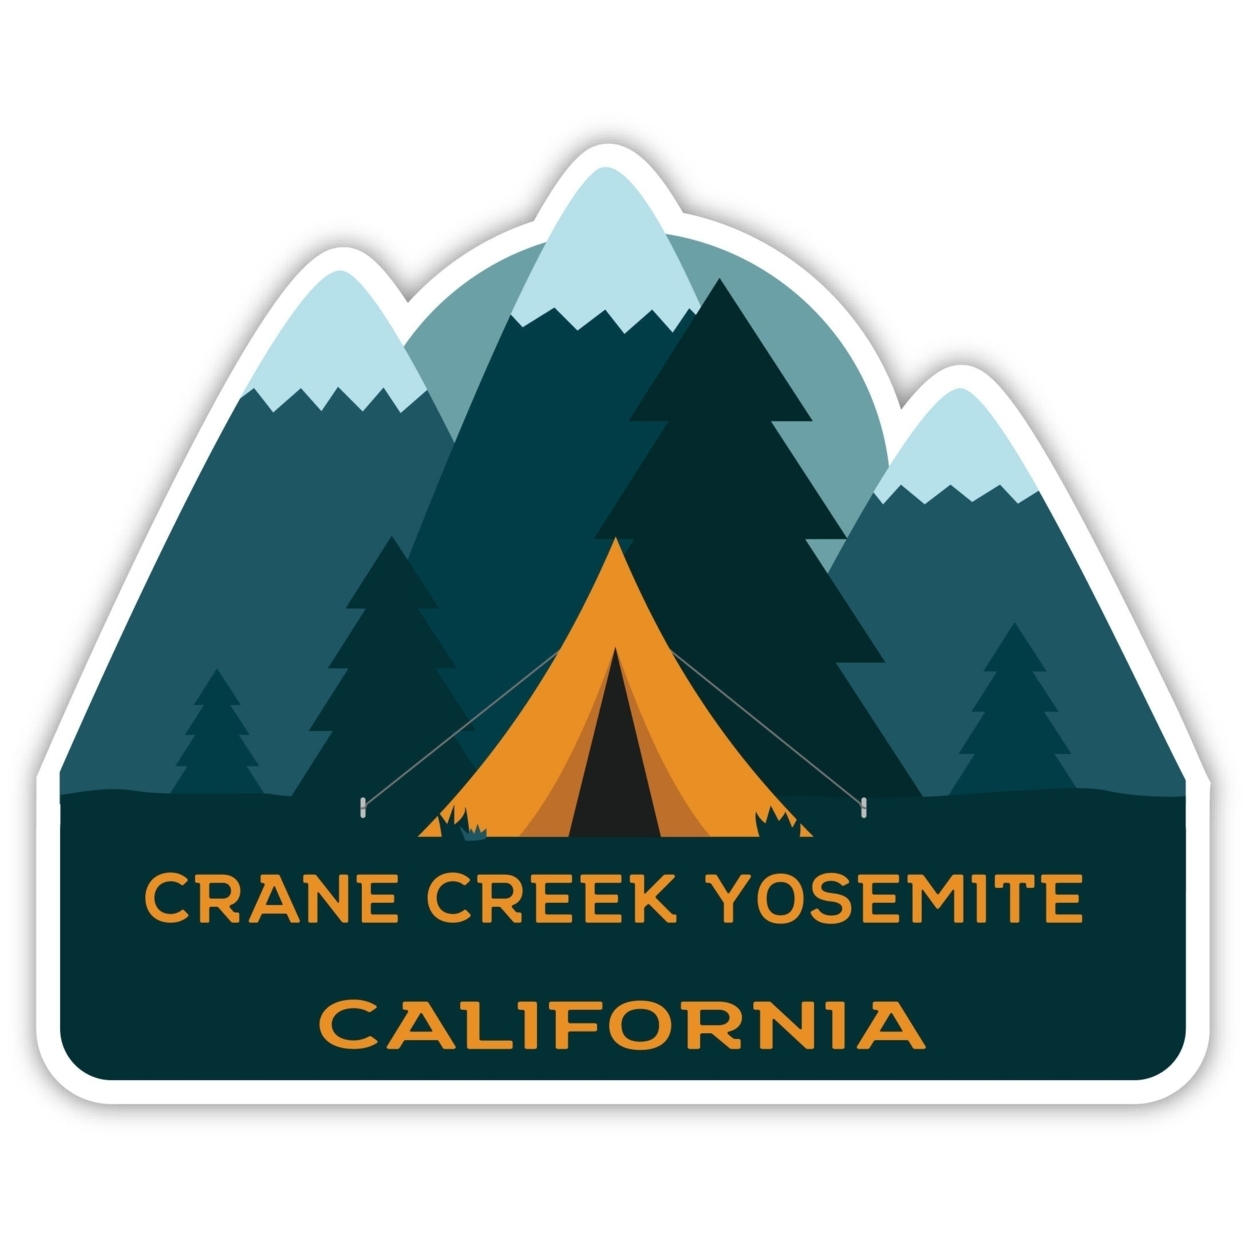 Crane Creek Yosemite California Souvenir Decorative Stickers (Choose Theme And Size) - 4-Pack, 10-Inch, Bear